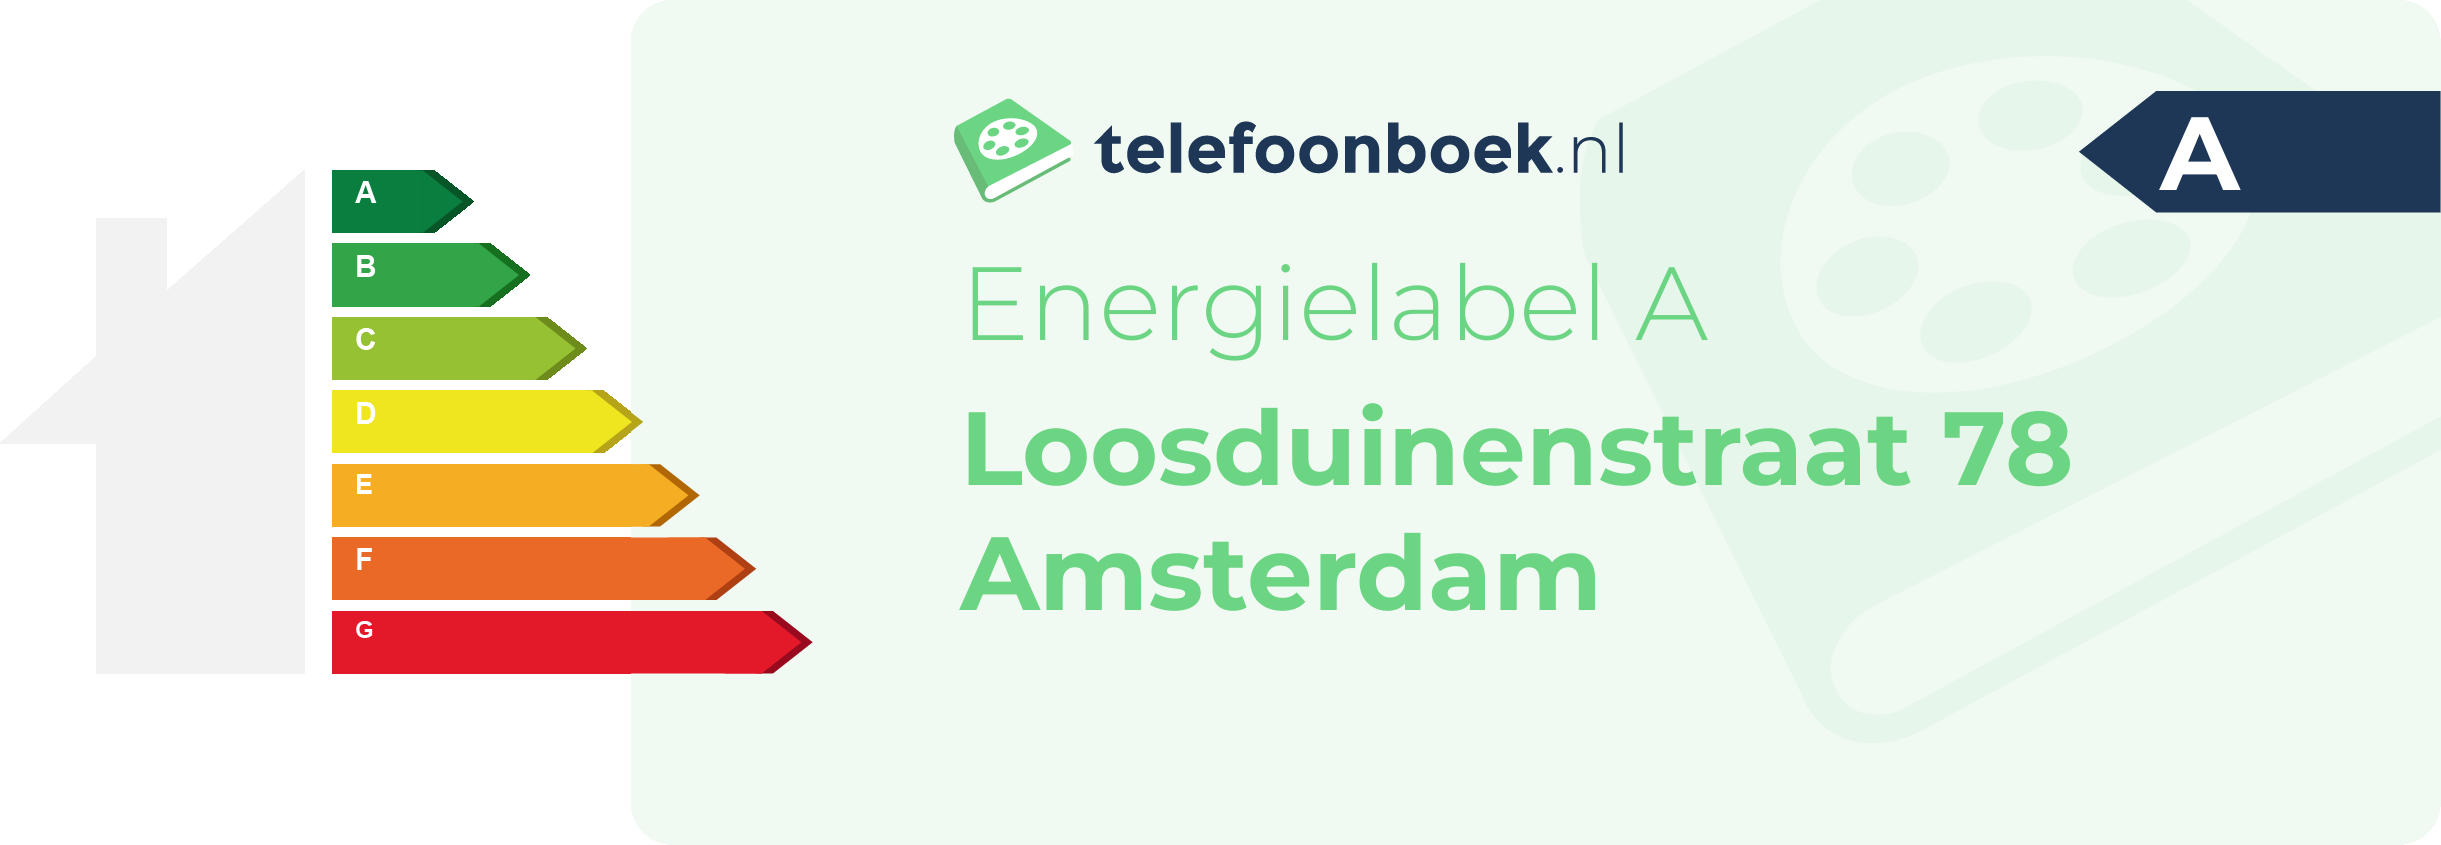 Energielabel Loosduinenstraat 78 Amsterdam